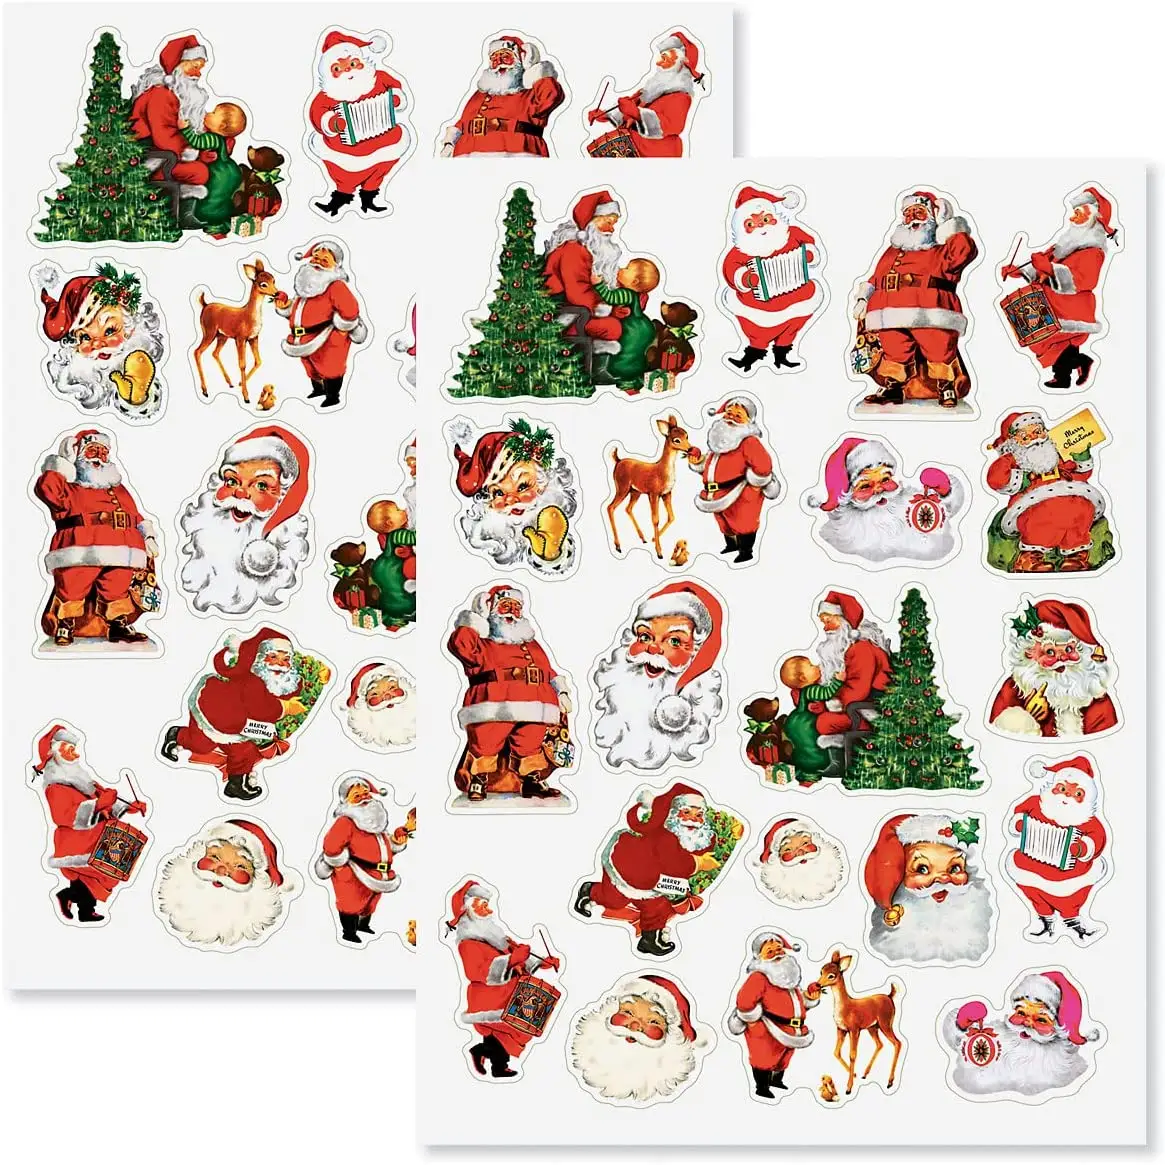 Reusable Christmas Stickers Christmas Tree Snowflake Deer Santa Claus PVC Sticker for Glass Windows